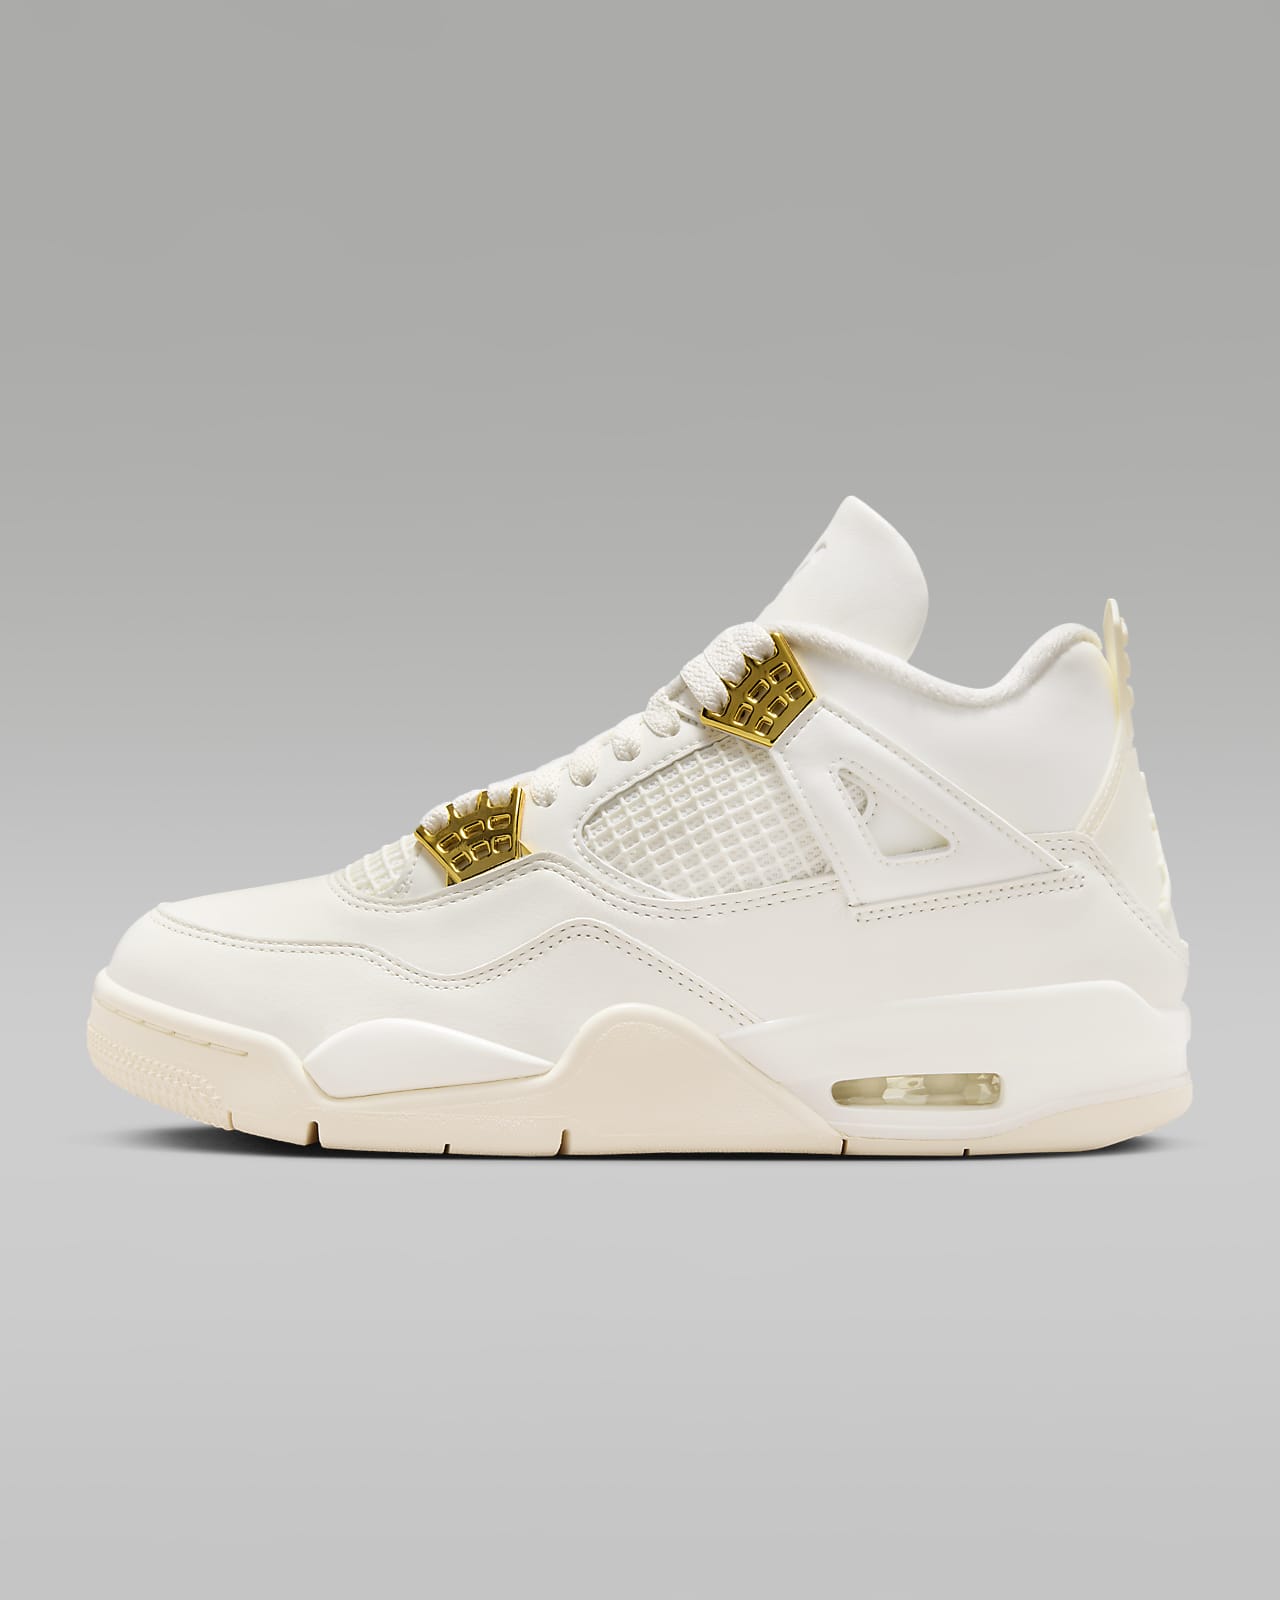 Air Jordan 4 Retro "White & Gold" Women's Shoes